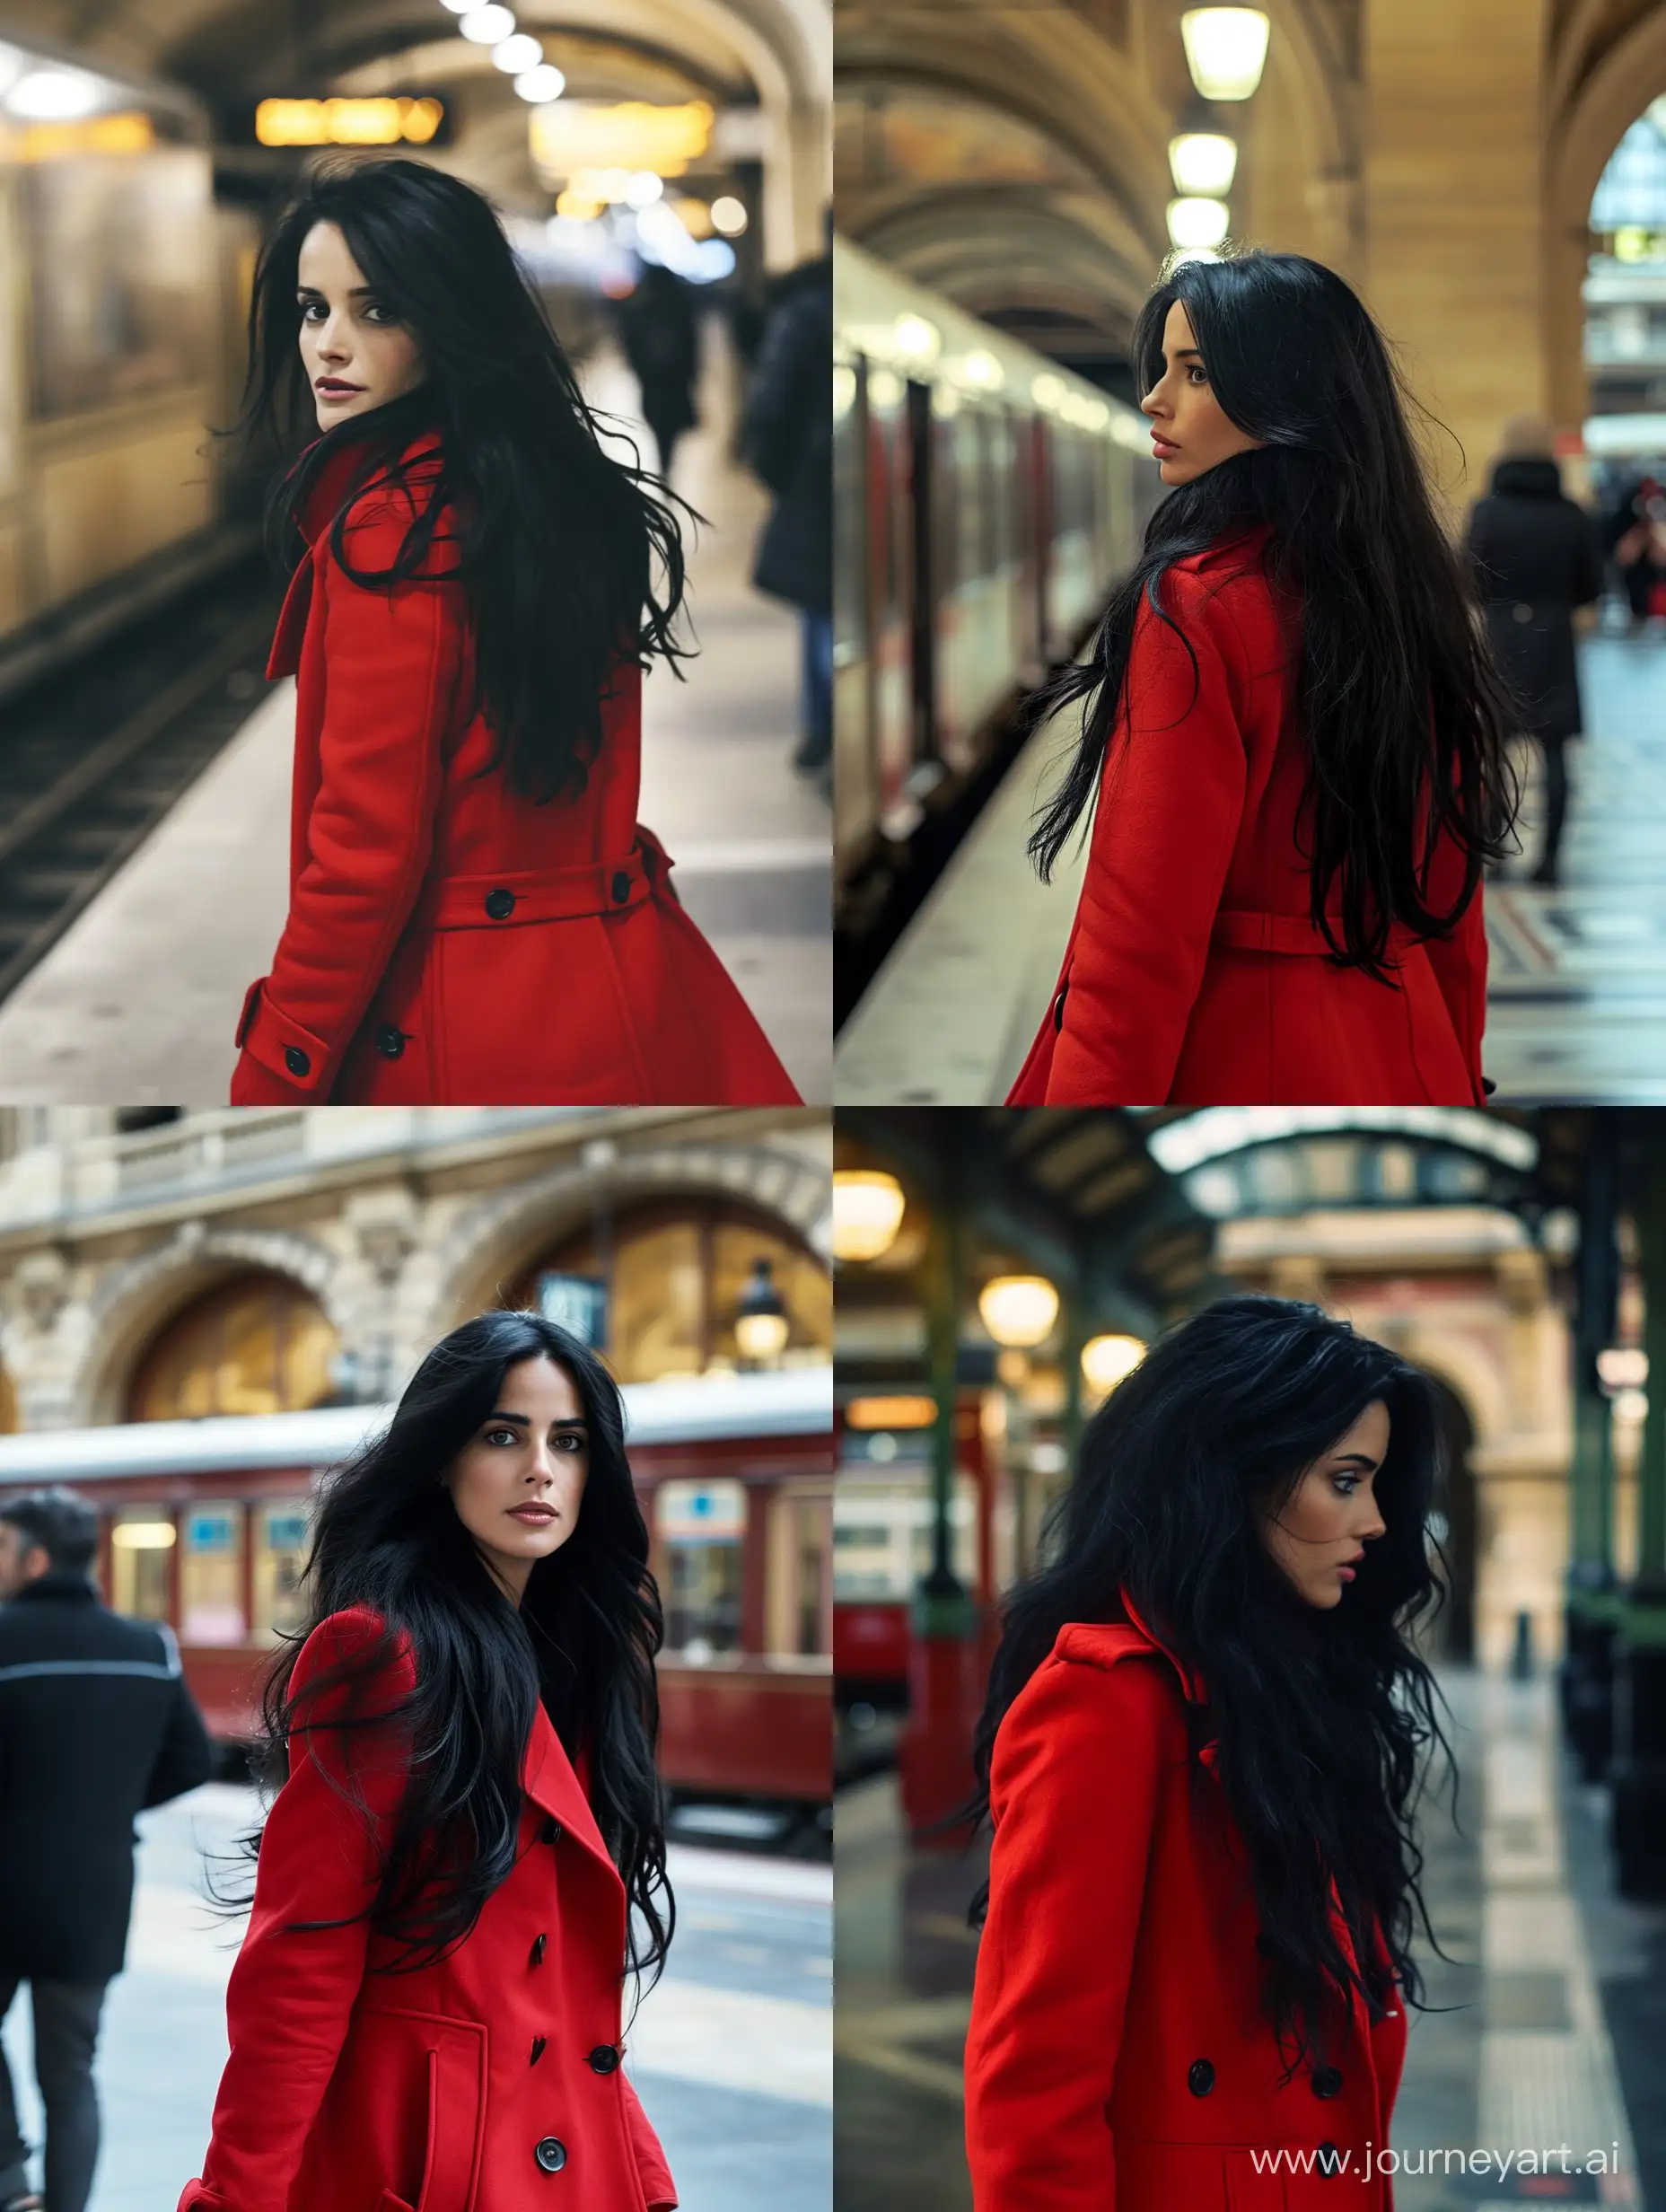 Stylish-Penelope-Cruz-in-Red-Coat-Walking-Through-Paris-Train-Station